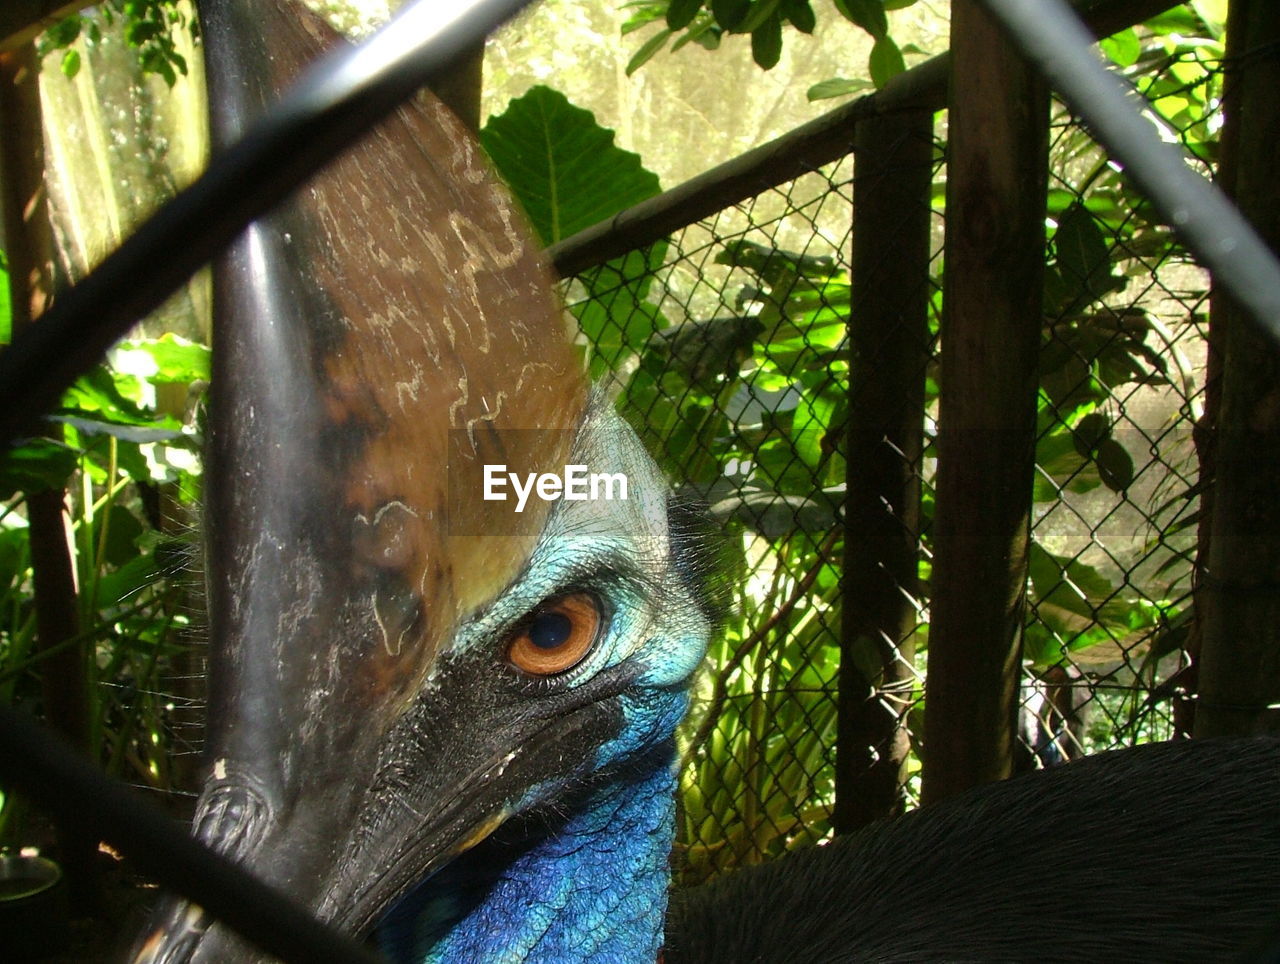 Under the threatening eye of a cassowary.